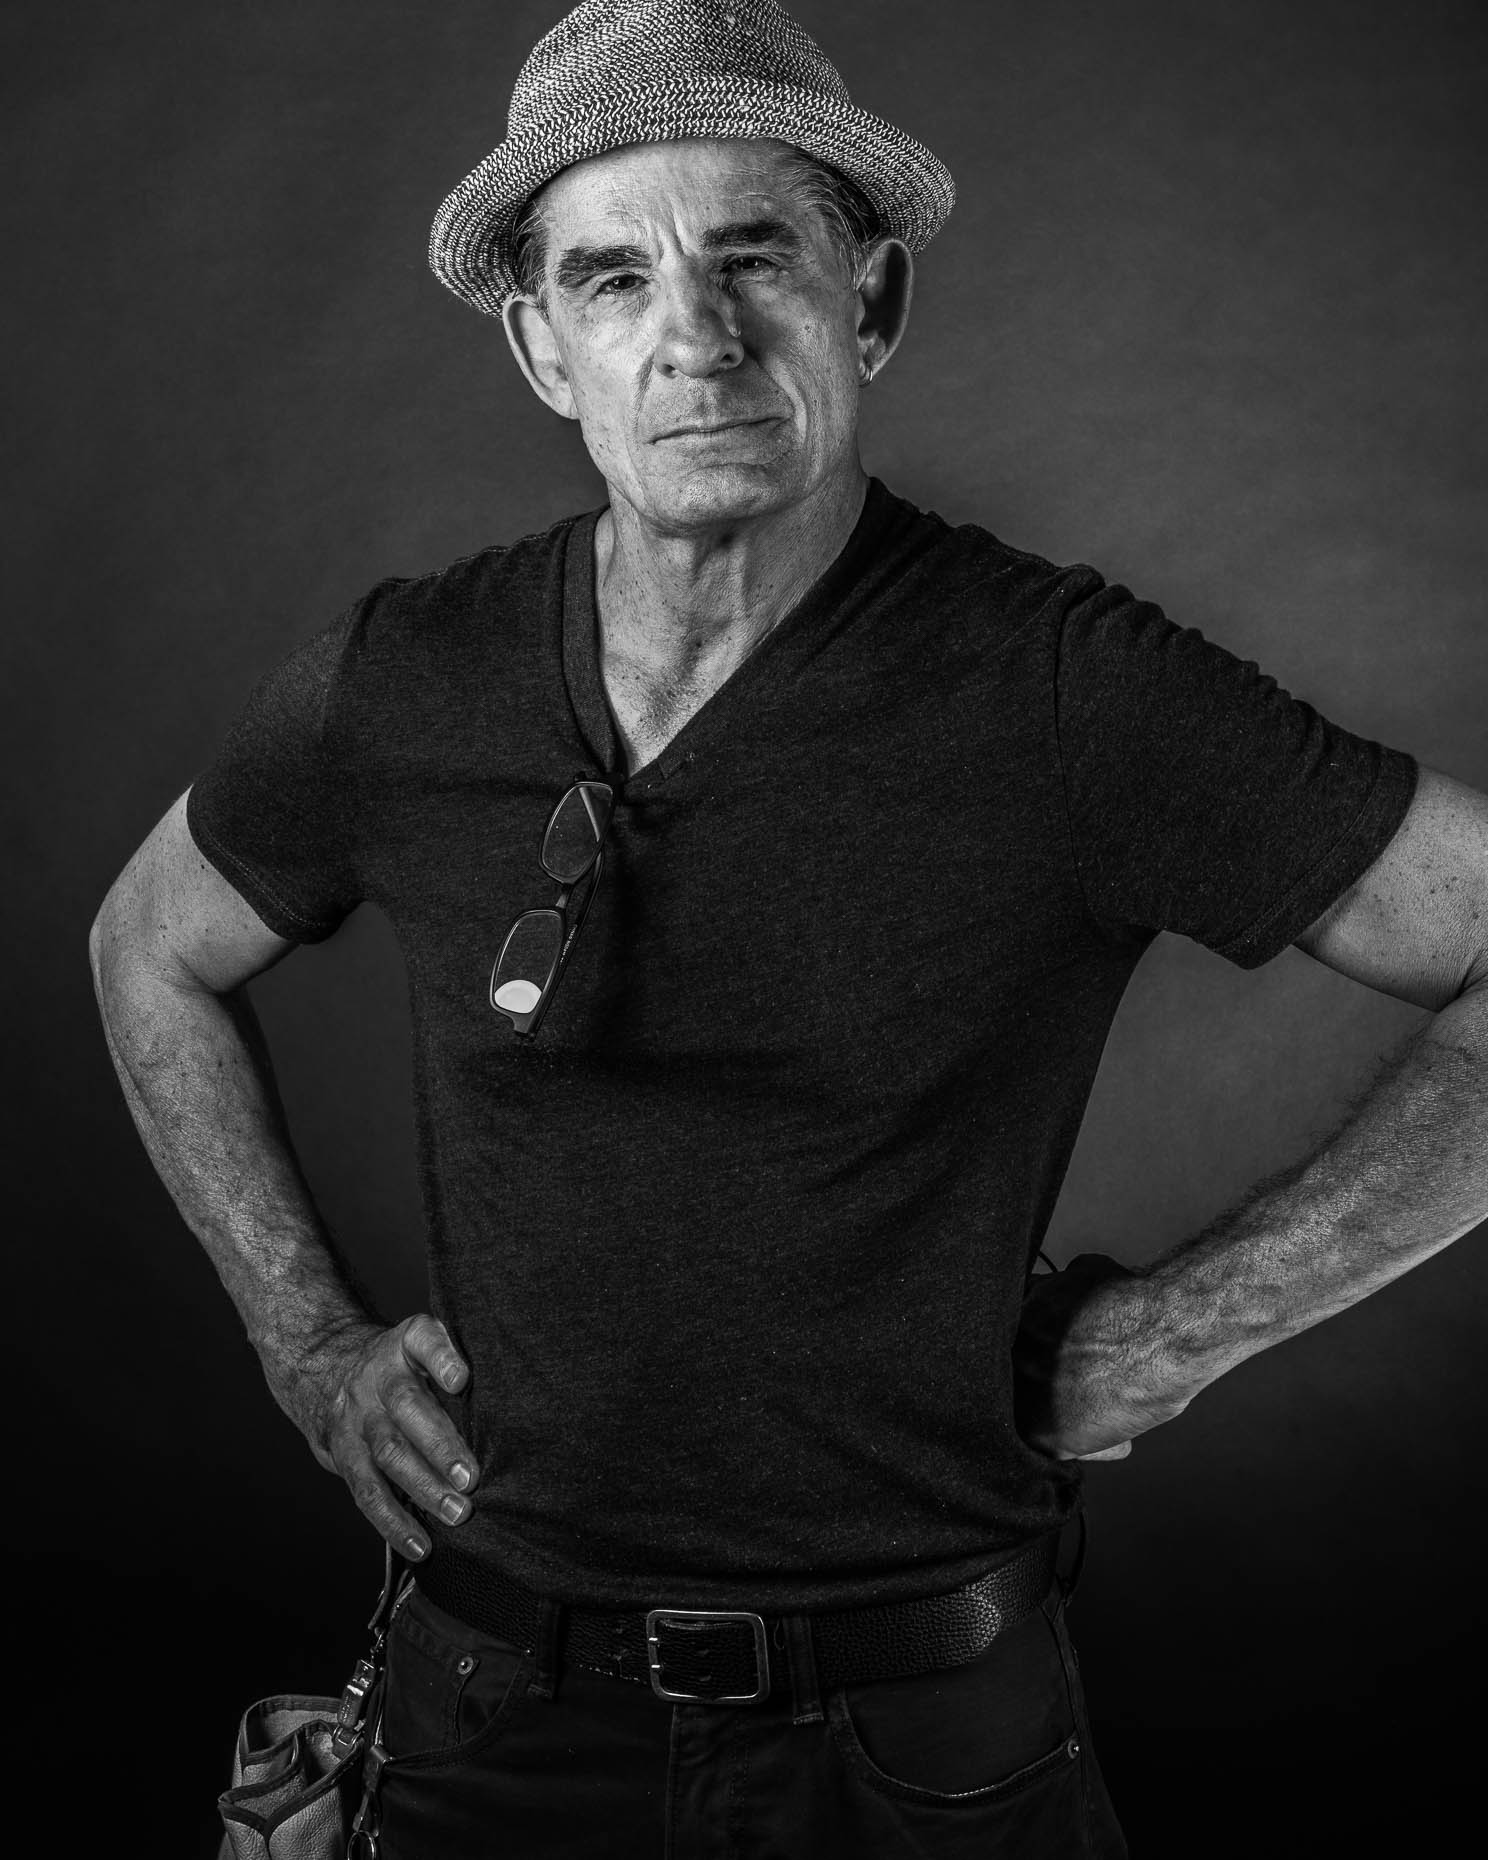 Jeff Bynum Photo | Portraits